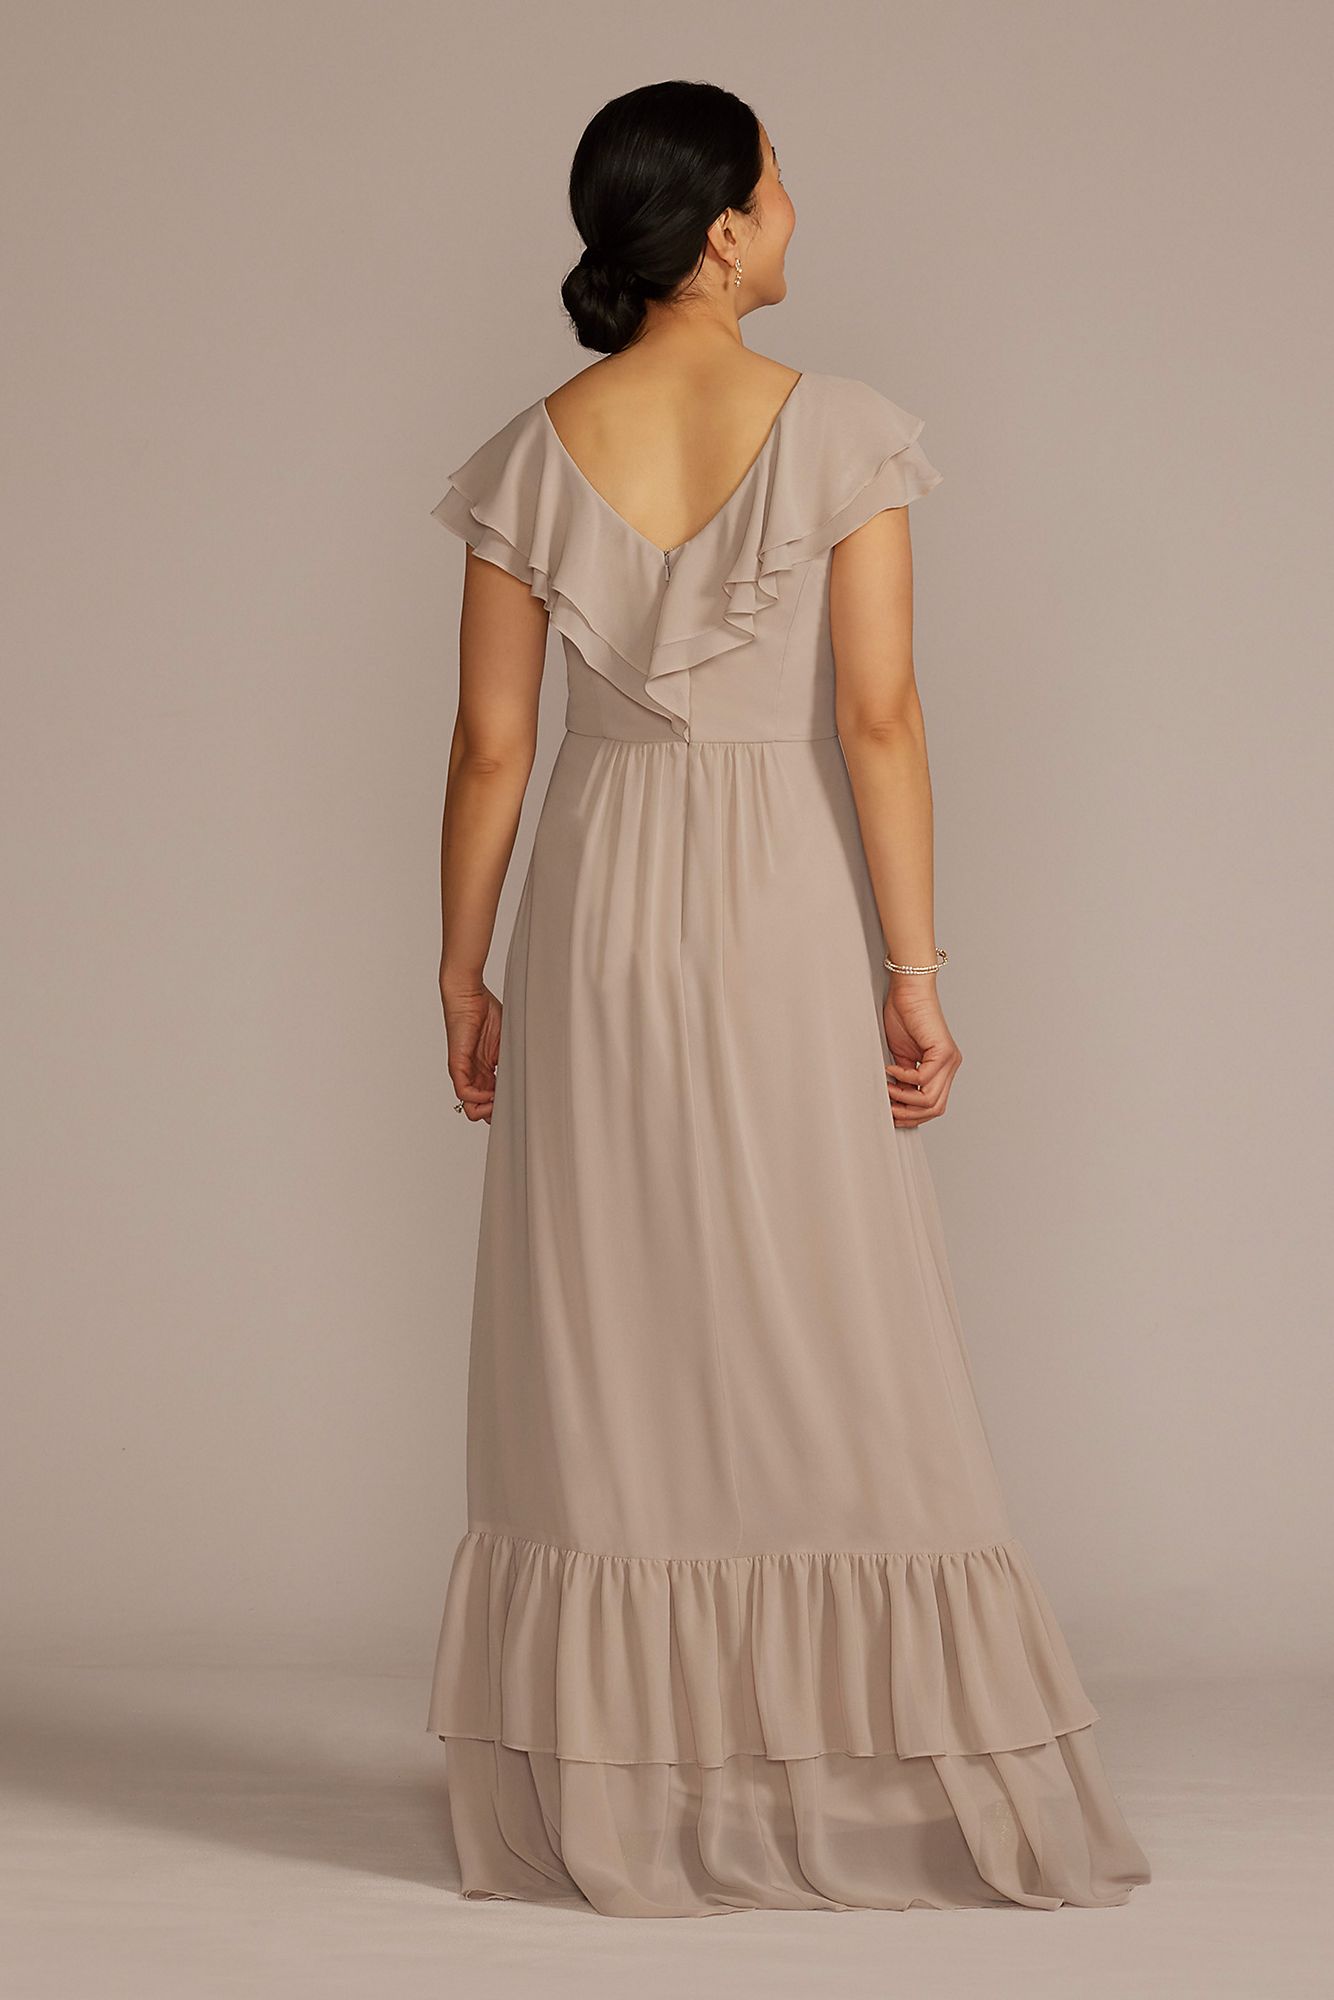 Chiffon Ruffle Boho Bridesmaid Dress David's Bridal F20586